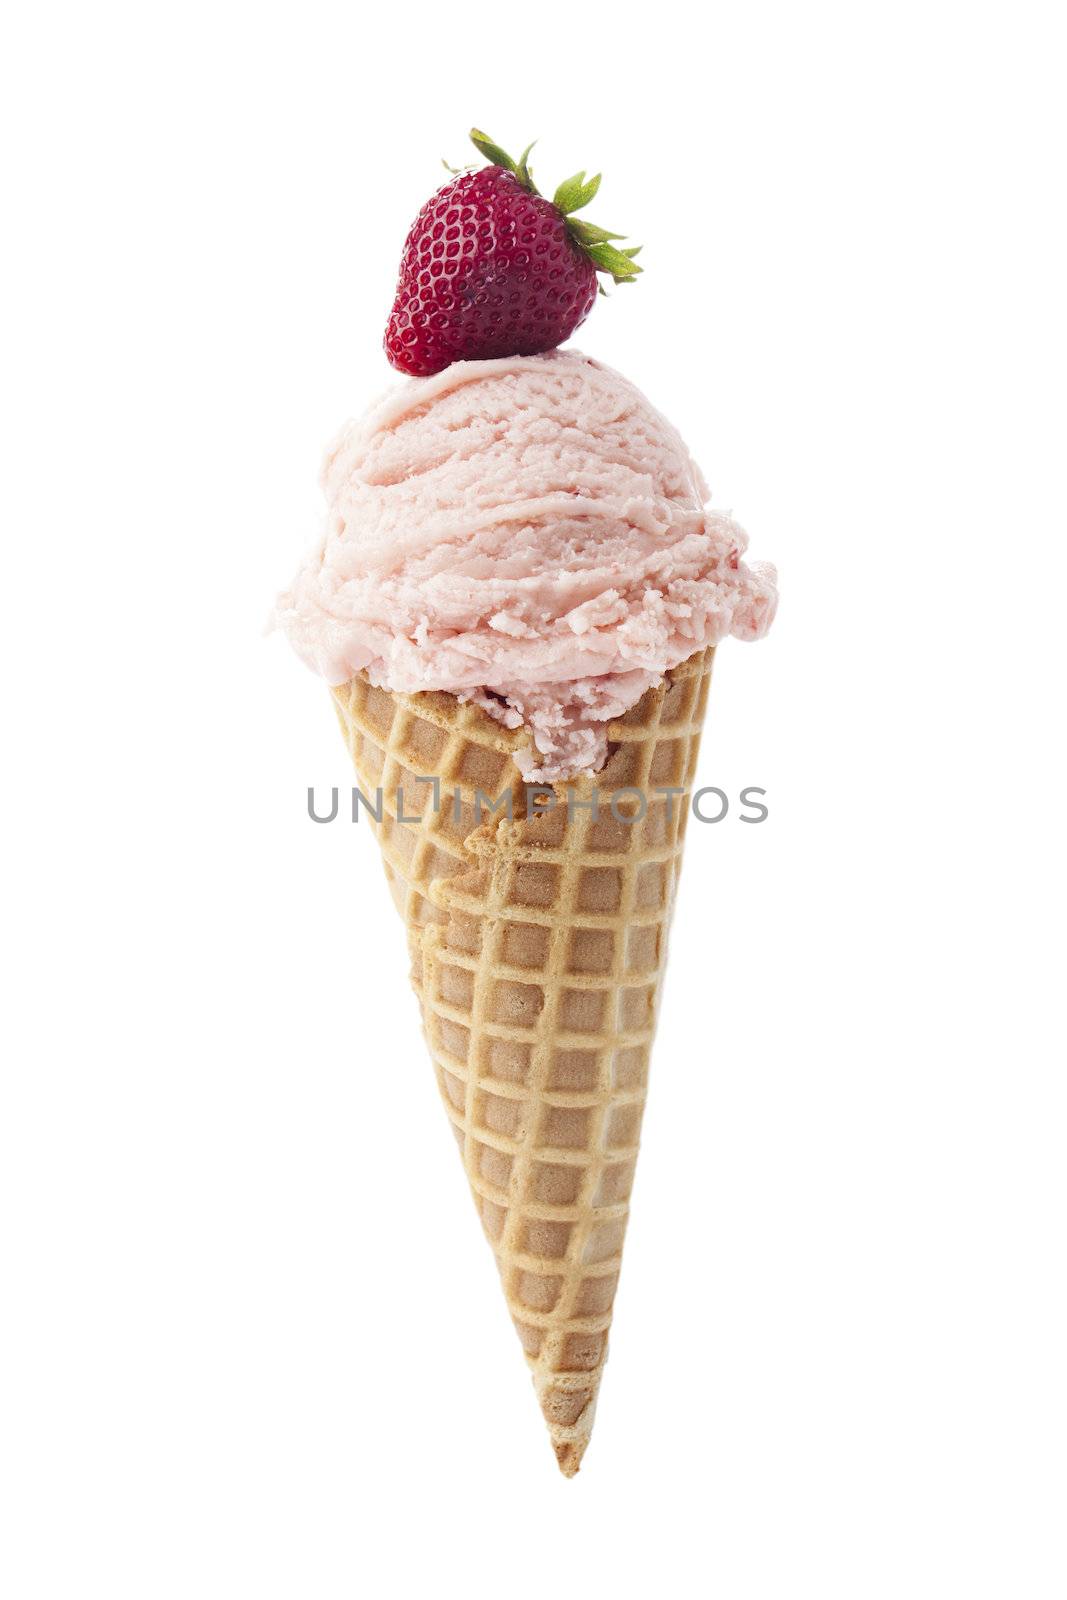 Strawberry flavor of a yogurt ice cream on a cone